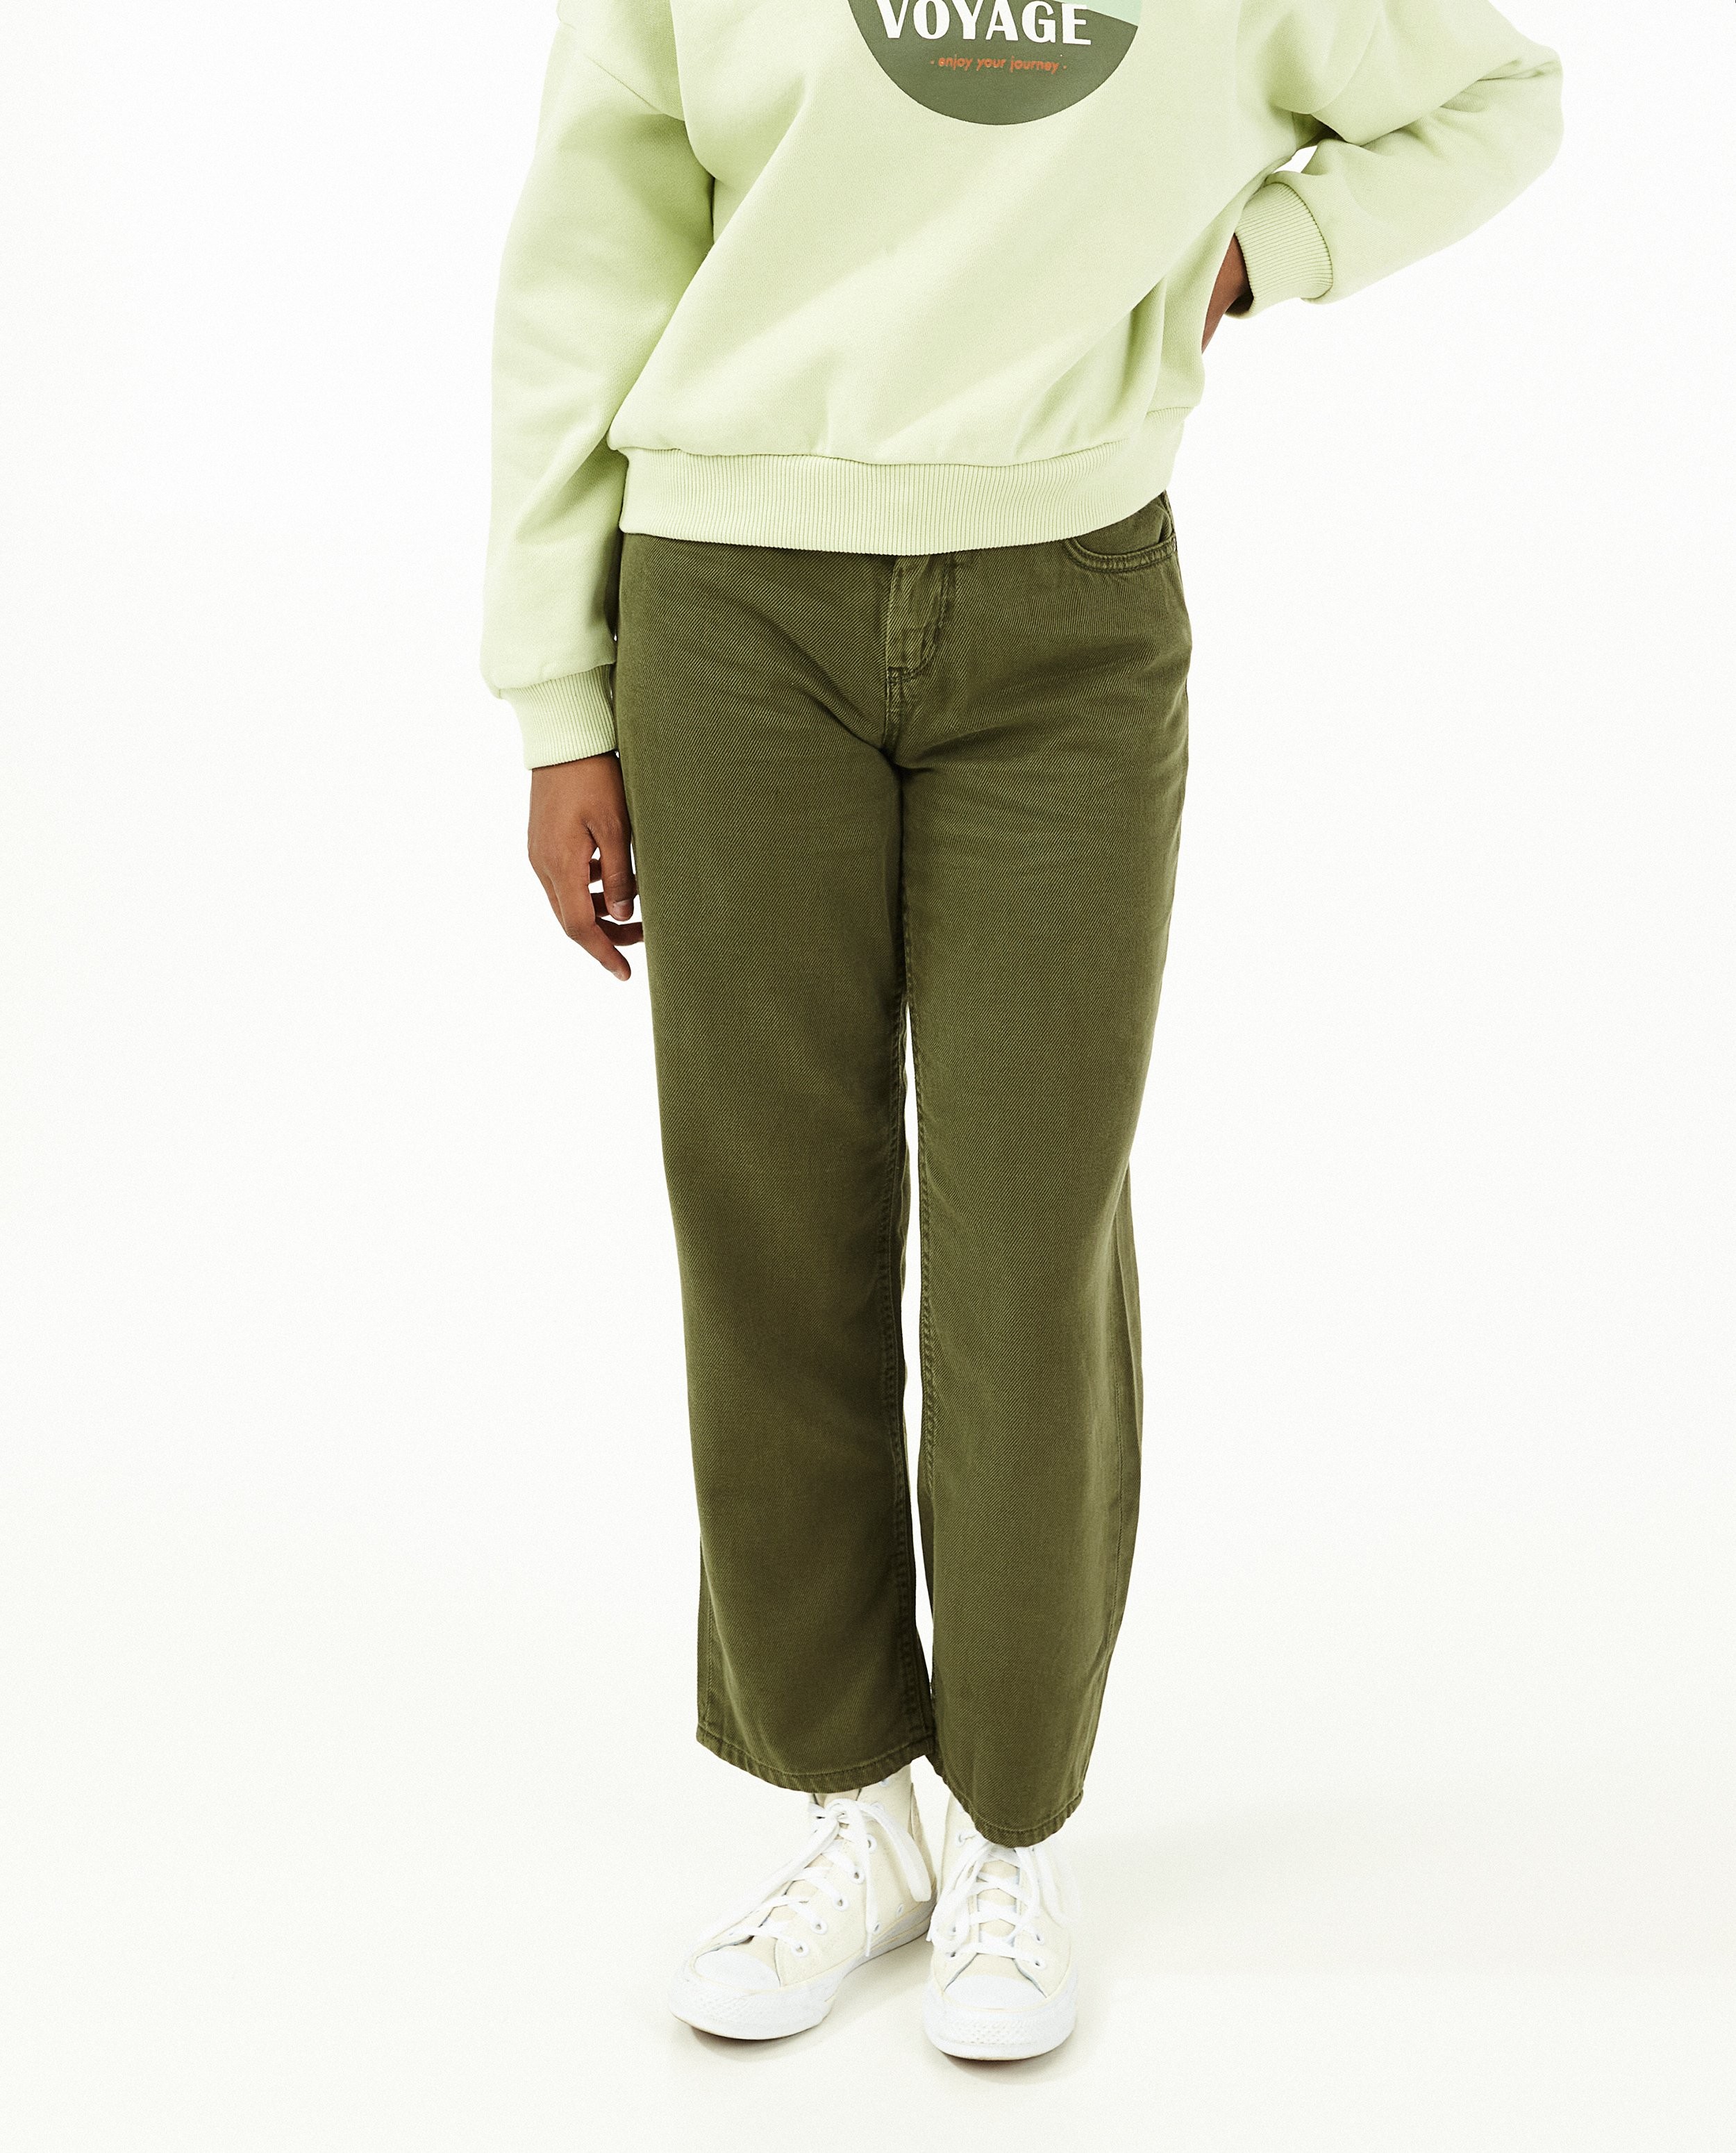 Jeans - Pantalon droit vert Lene